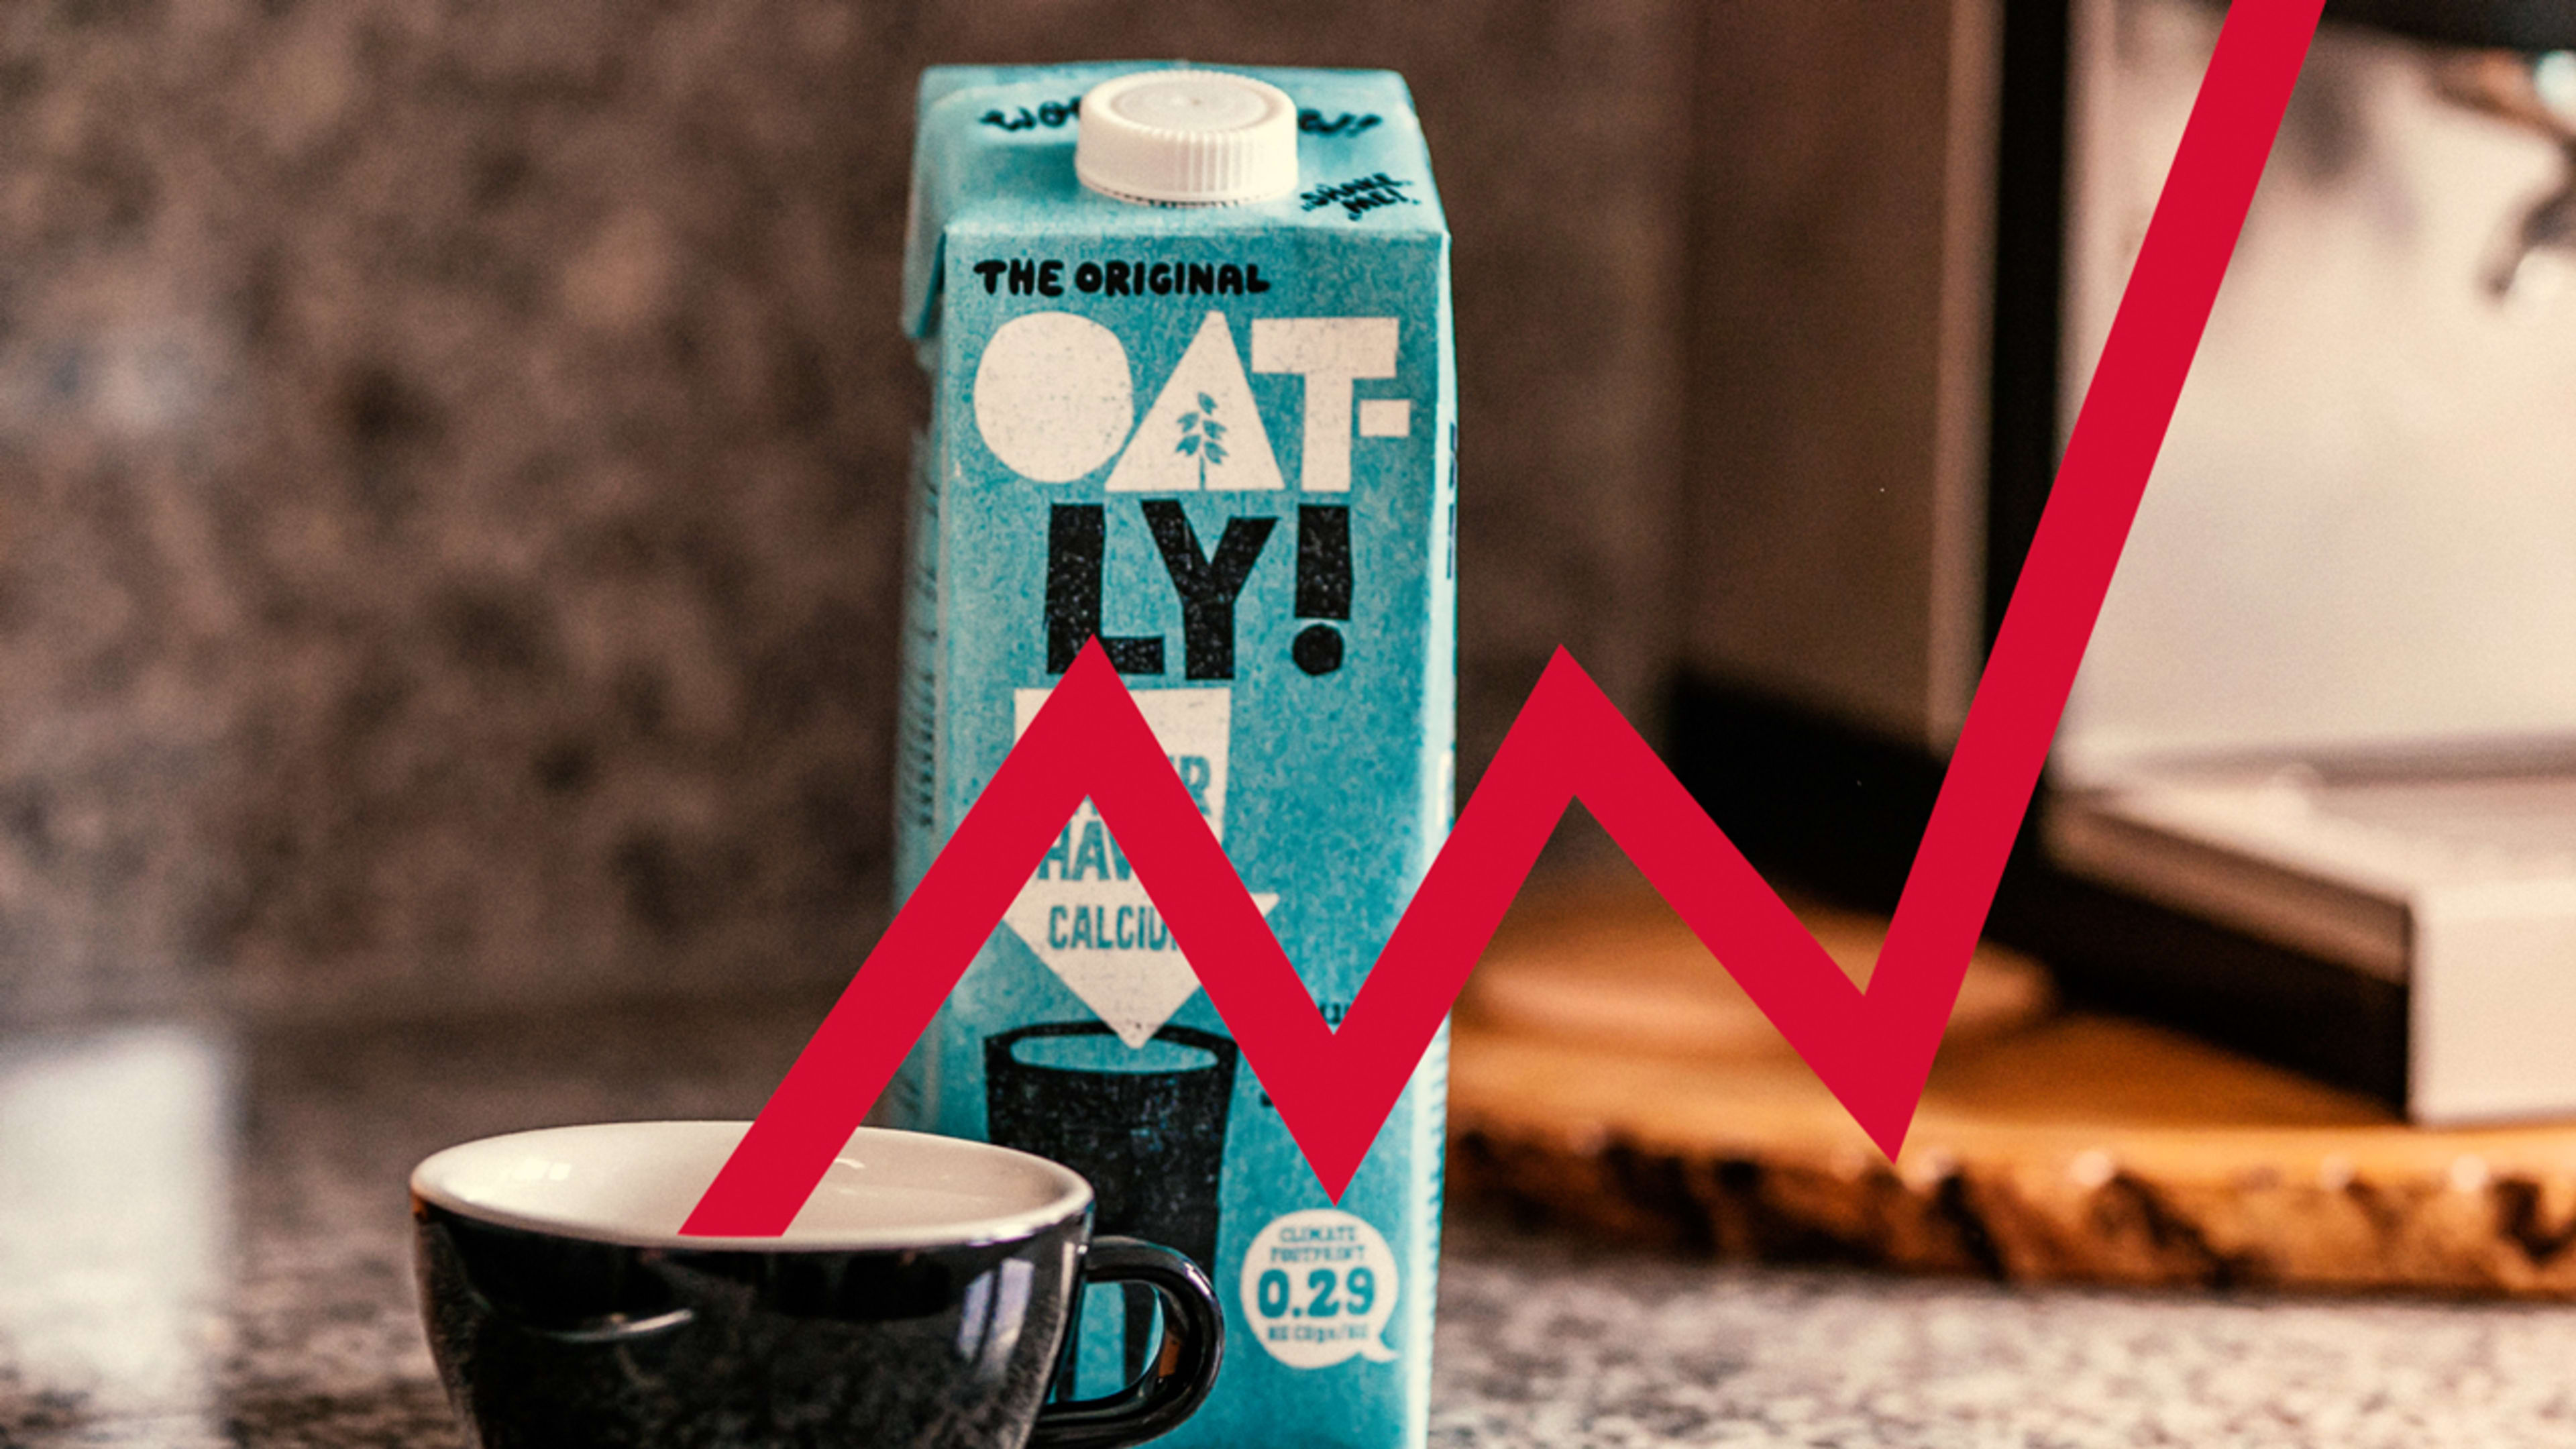 Investors are slurping up Oatly stock in the oat-milk company’s Nasdaq debut